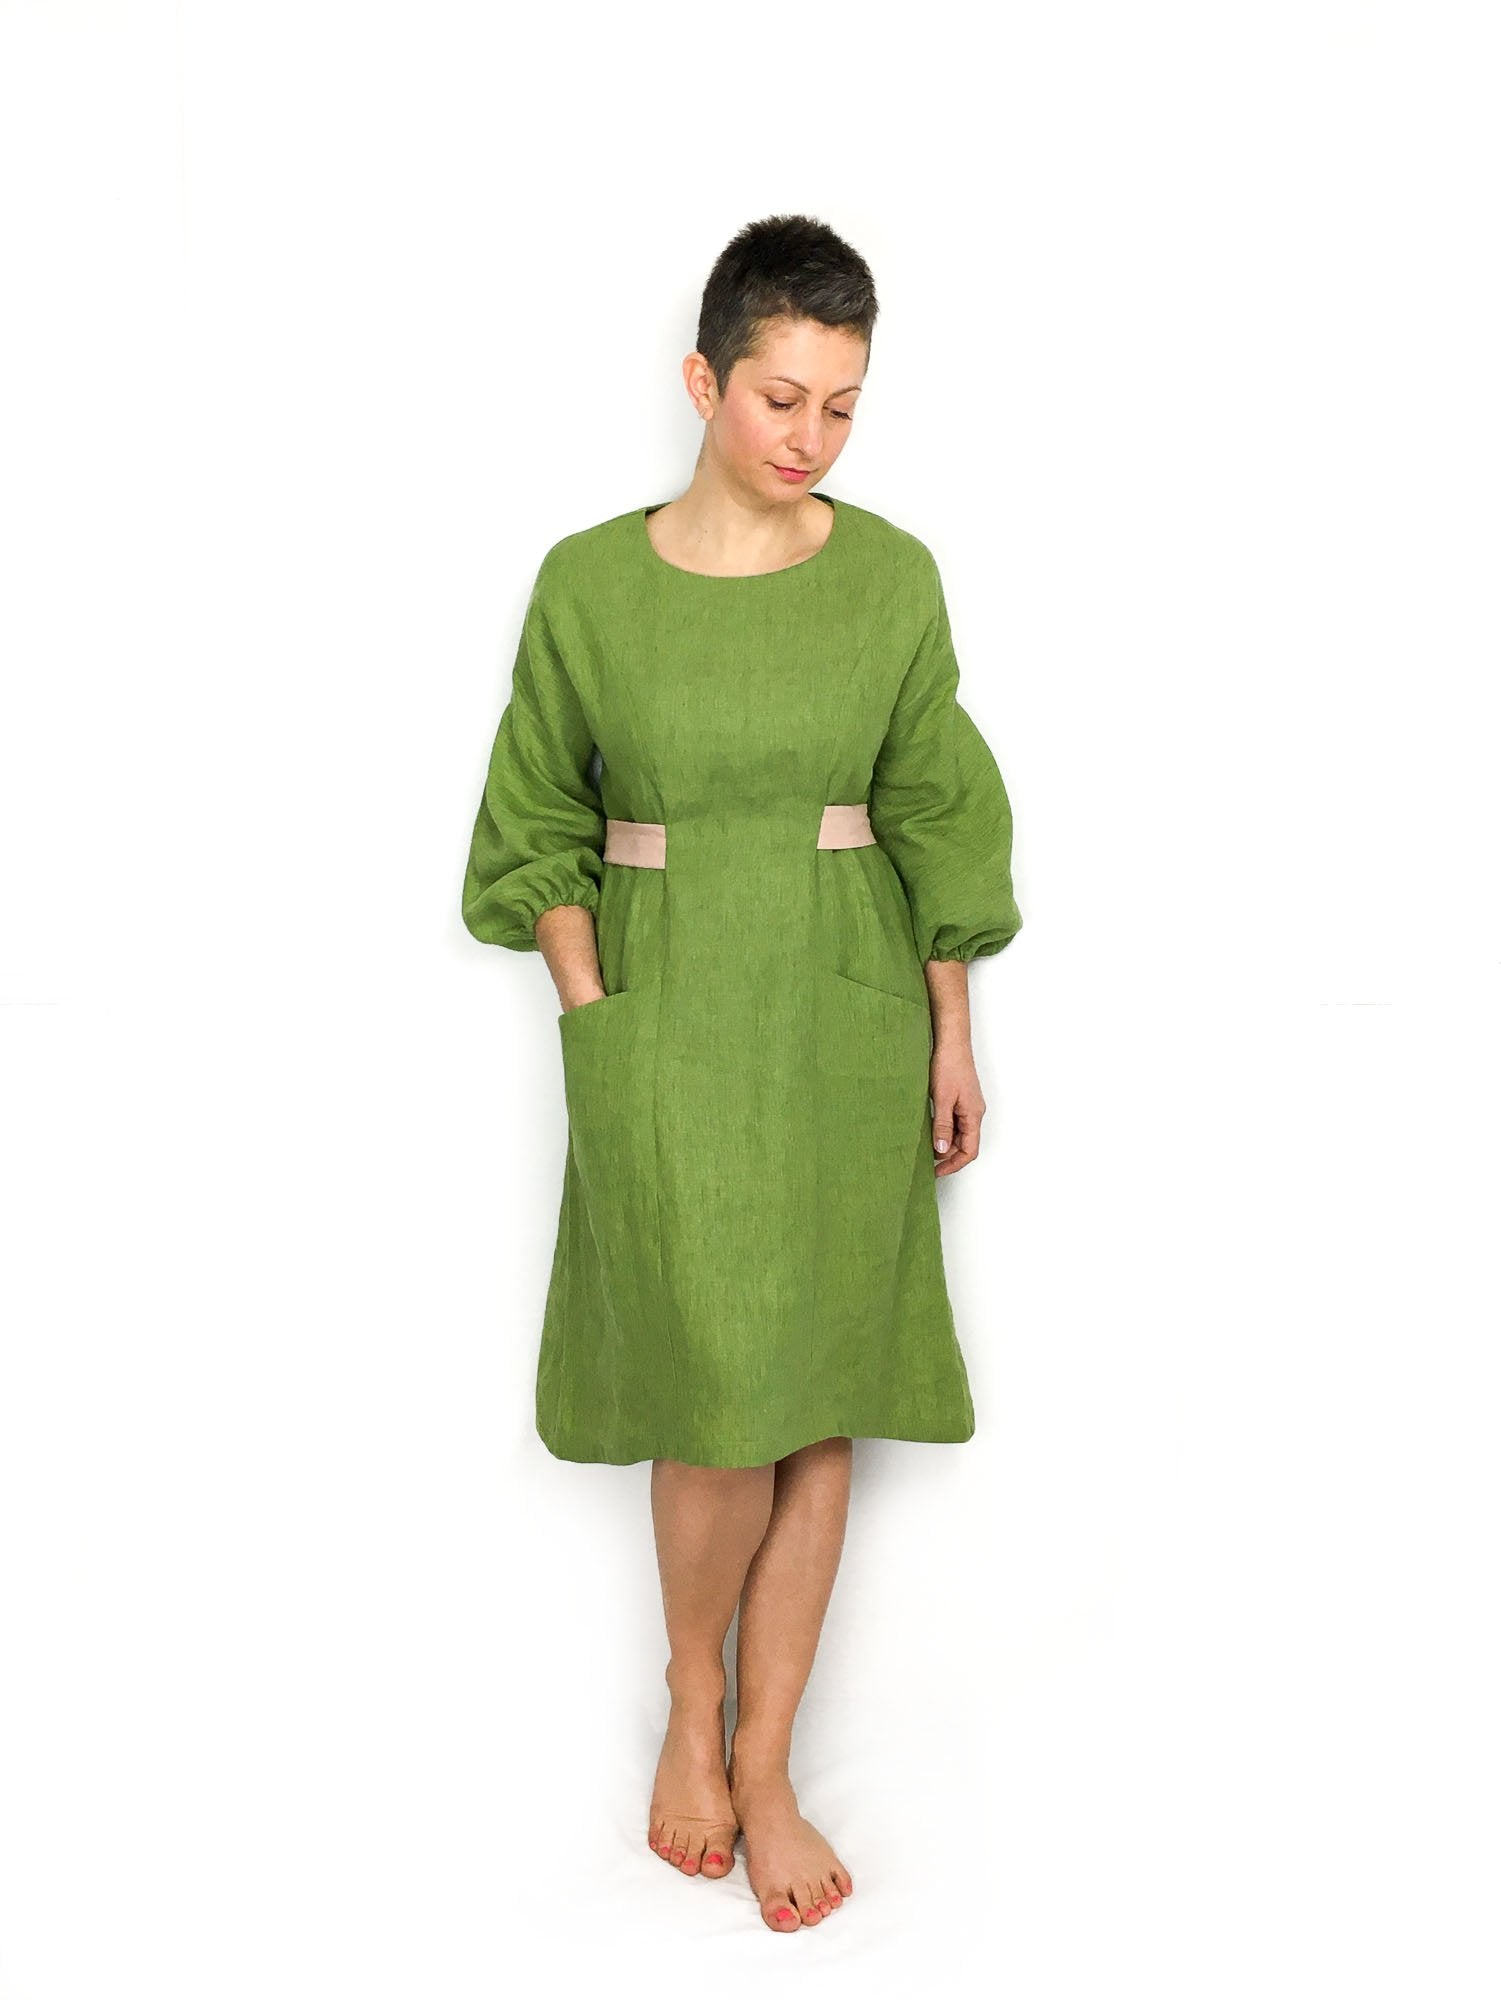 Dhurata Davies - Jasmine Tee and Dress - Paper Sewing Pattern